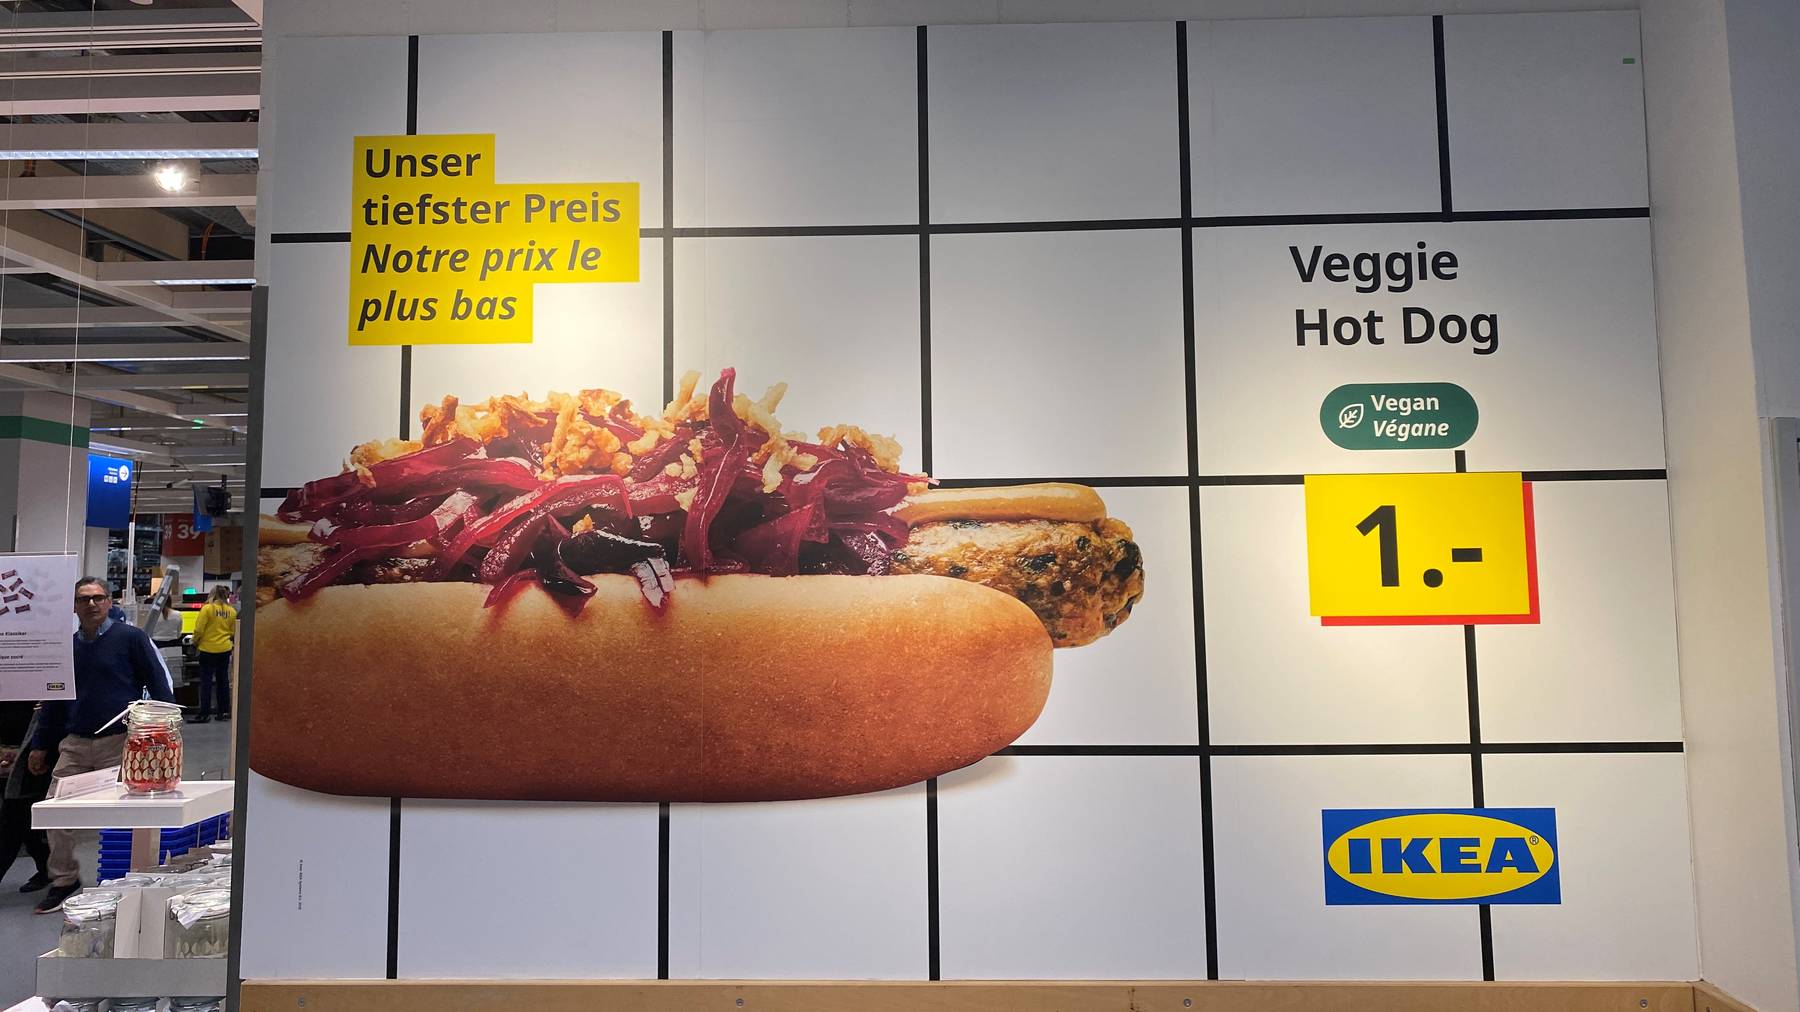 Vegi-Hotdog kostet 1 Franken.